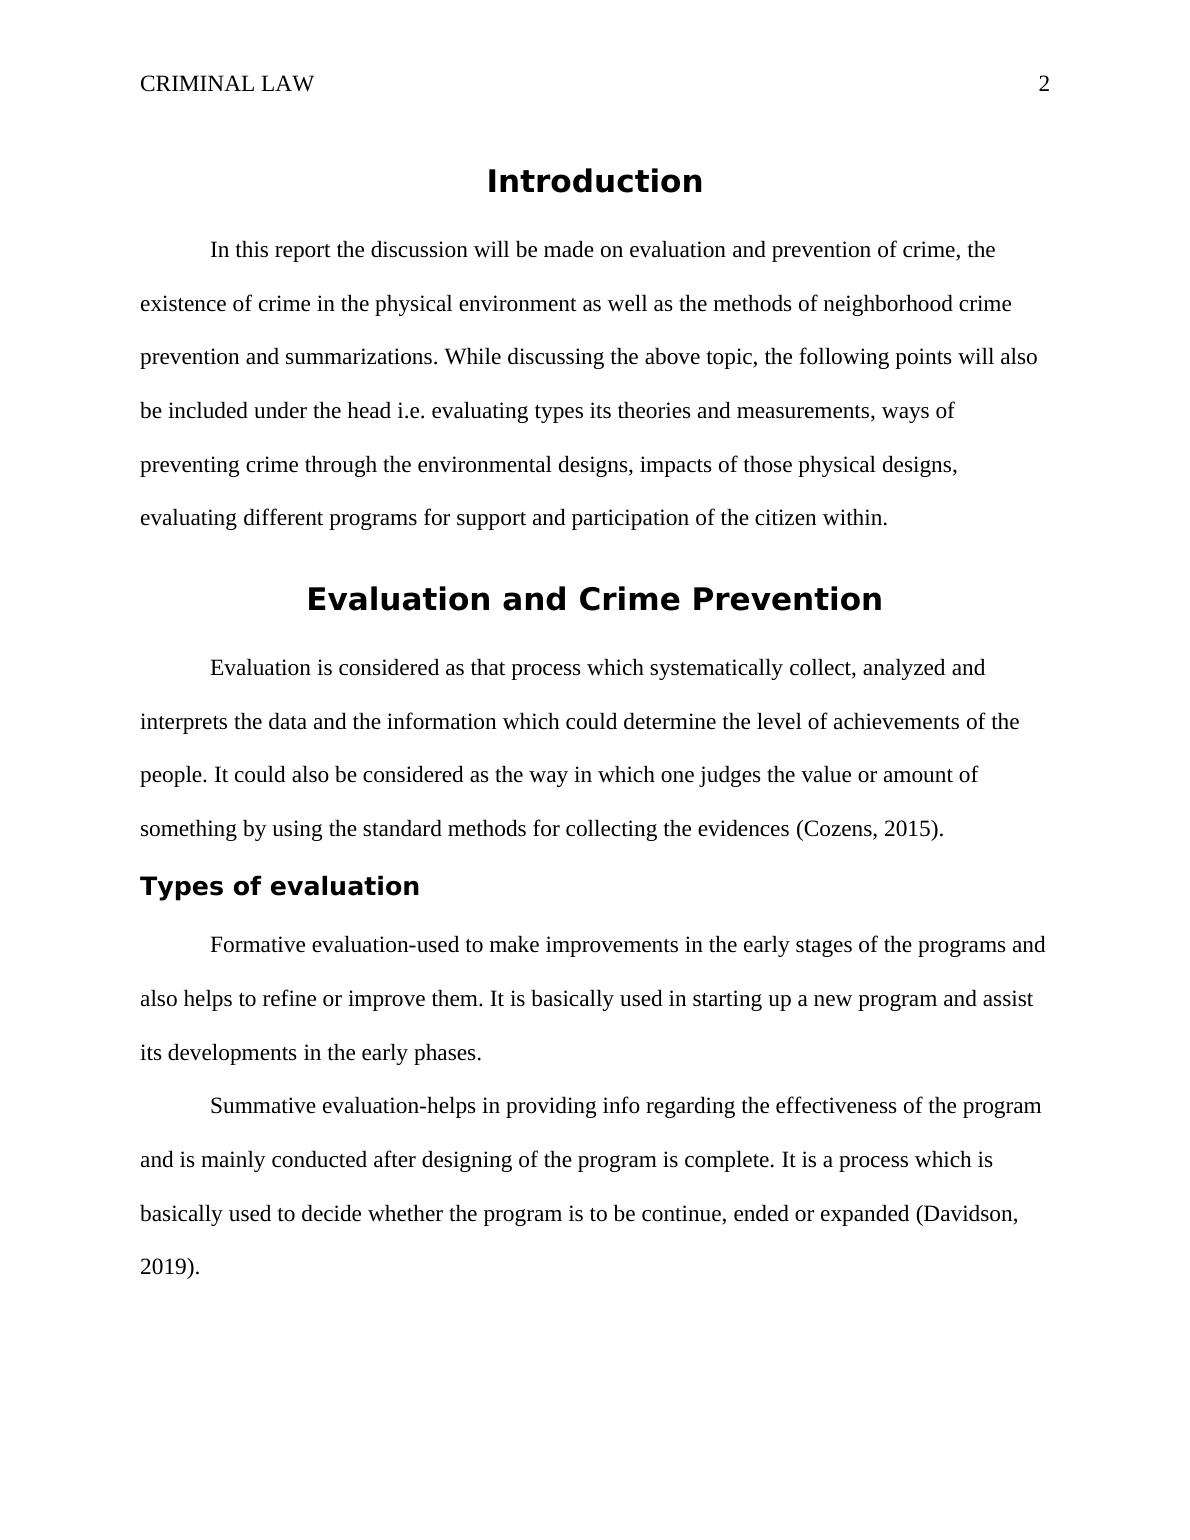 Evaluation and Crime Prevention: Crime Prevention Program in the United States_3